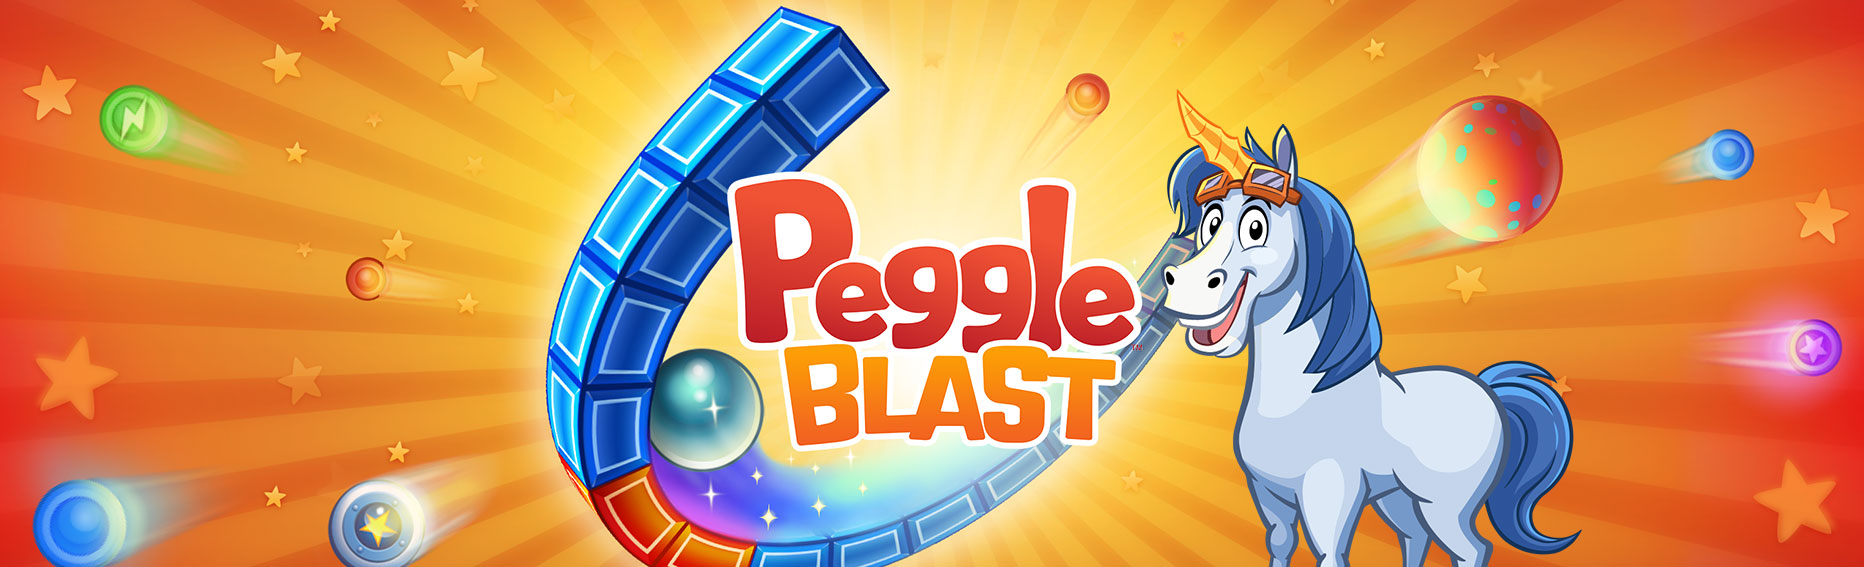 Ea 世界中で人気を博したパズルゲーム Peggle の最新作 Peggle Blast を全世界で配信開始 プレイスタイルは基本無料の縦持ち型へ Social Game Info